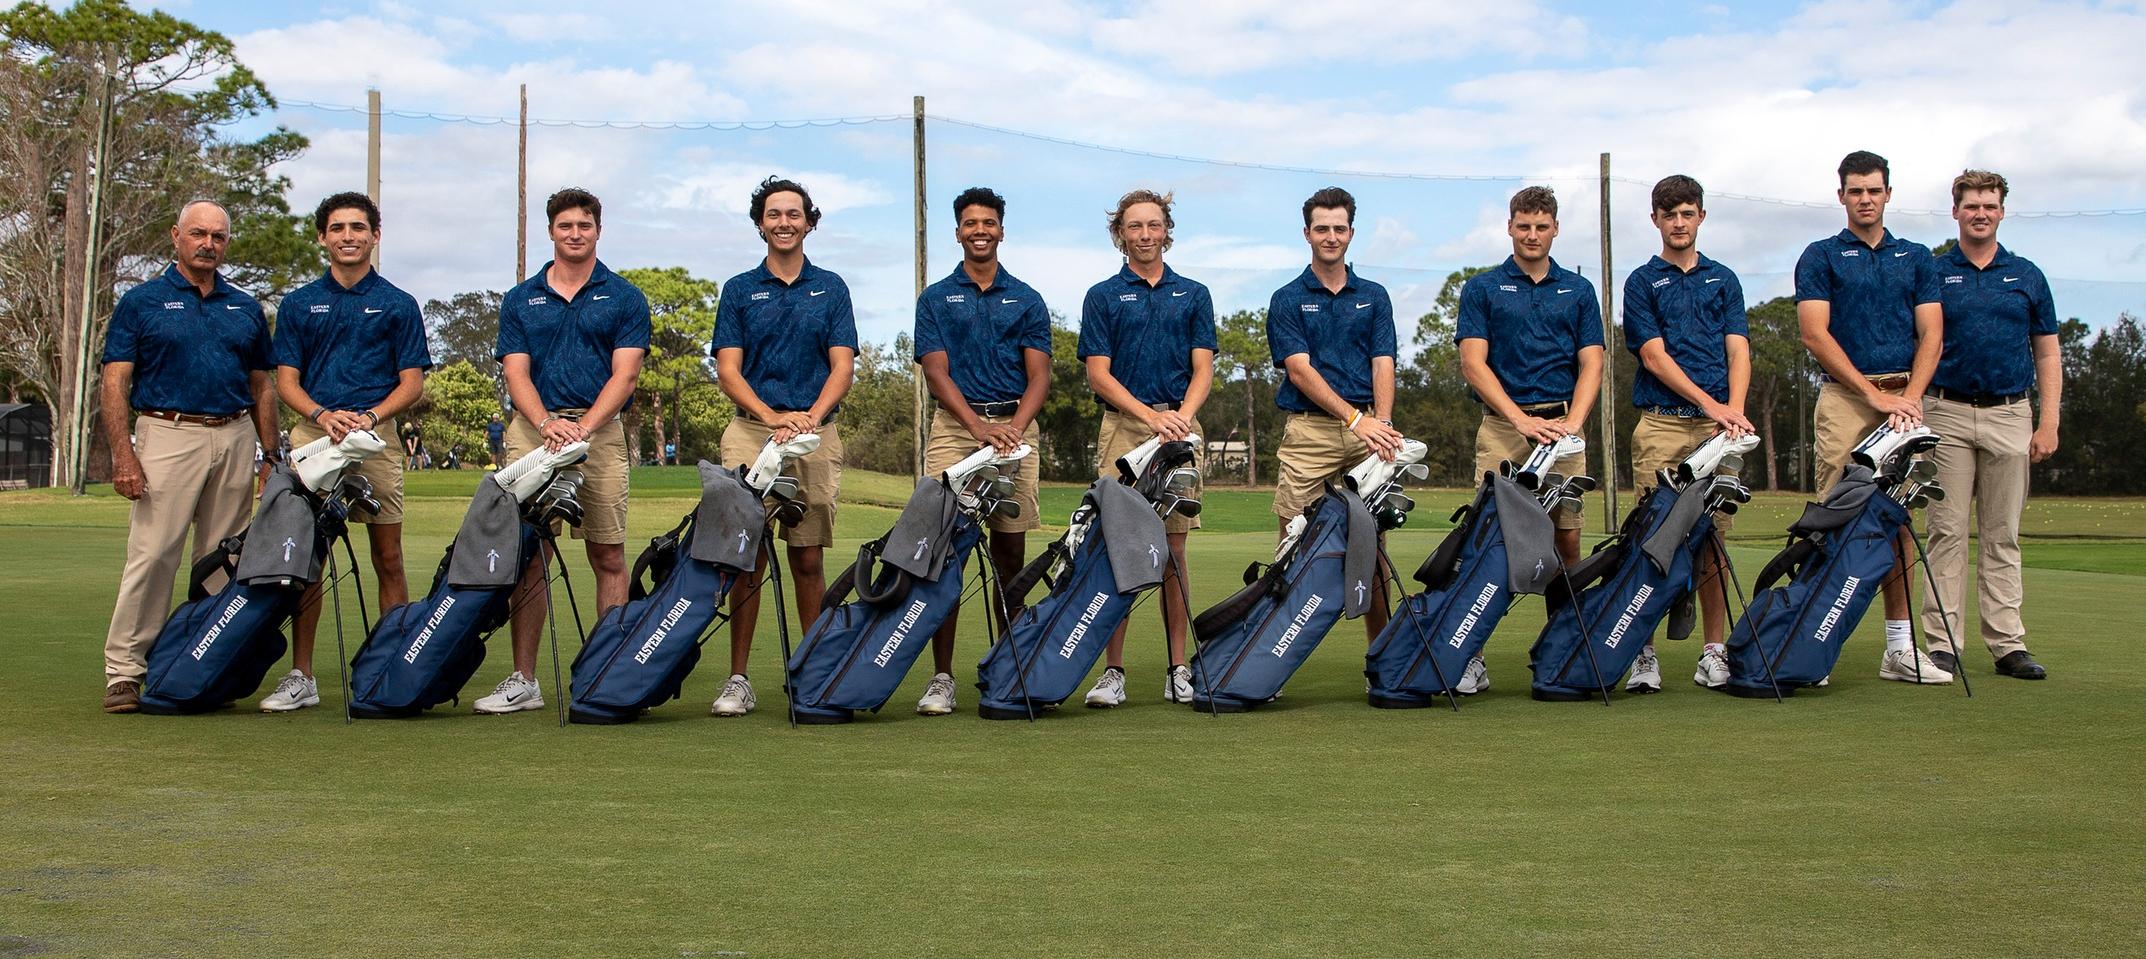 Men's golf team to tee off in Alabama